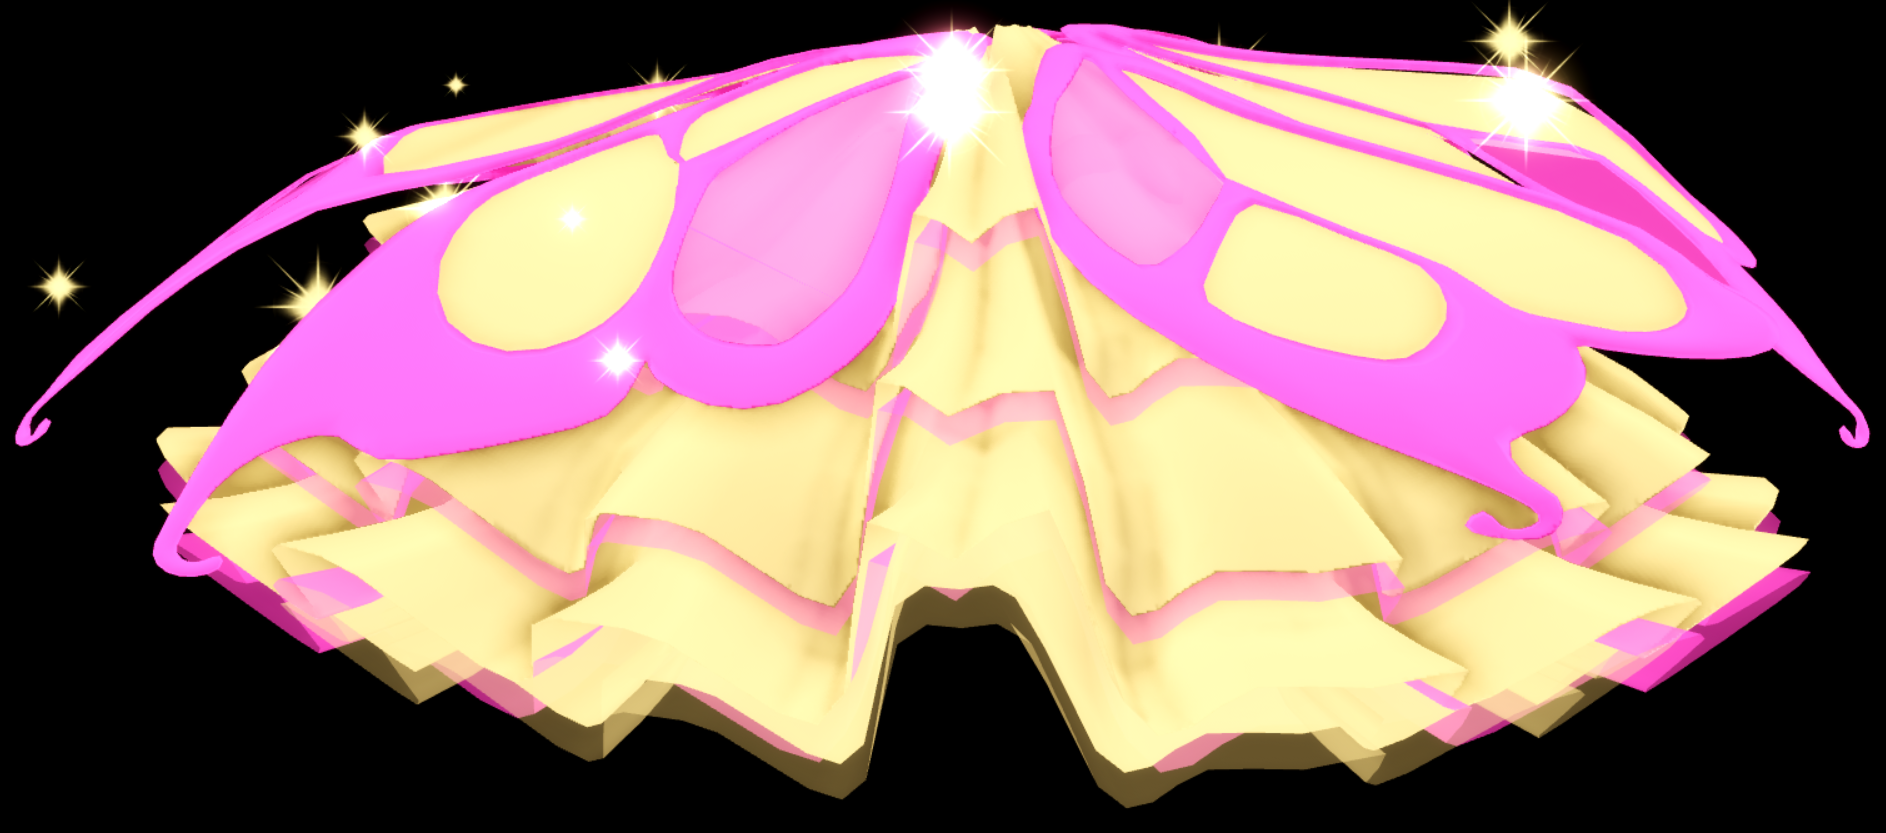 Fluttering Butterfly Skirt Royale High Wiki Fandom - roblox royal high skirts